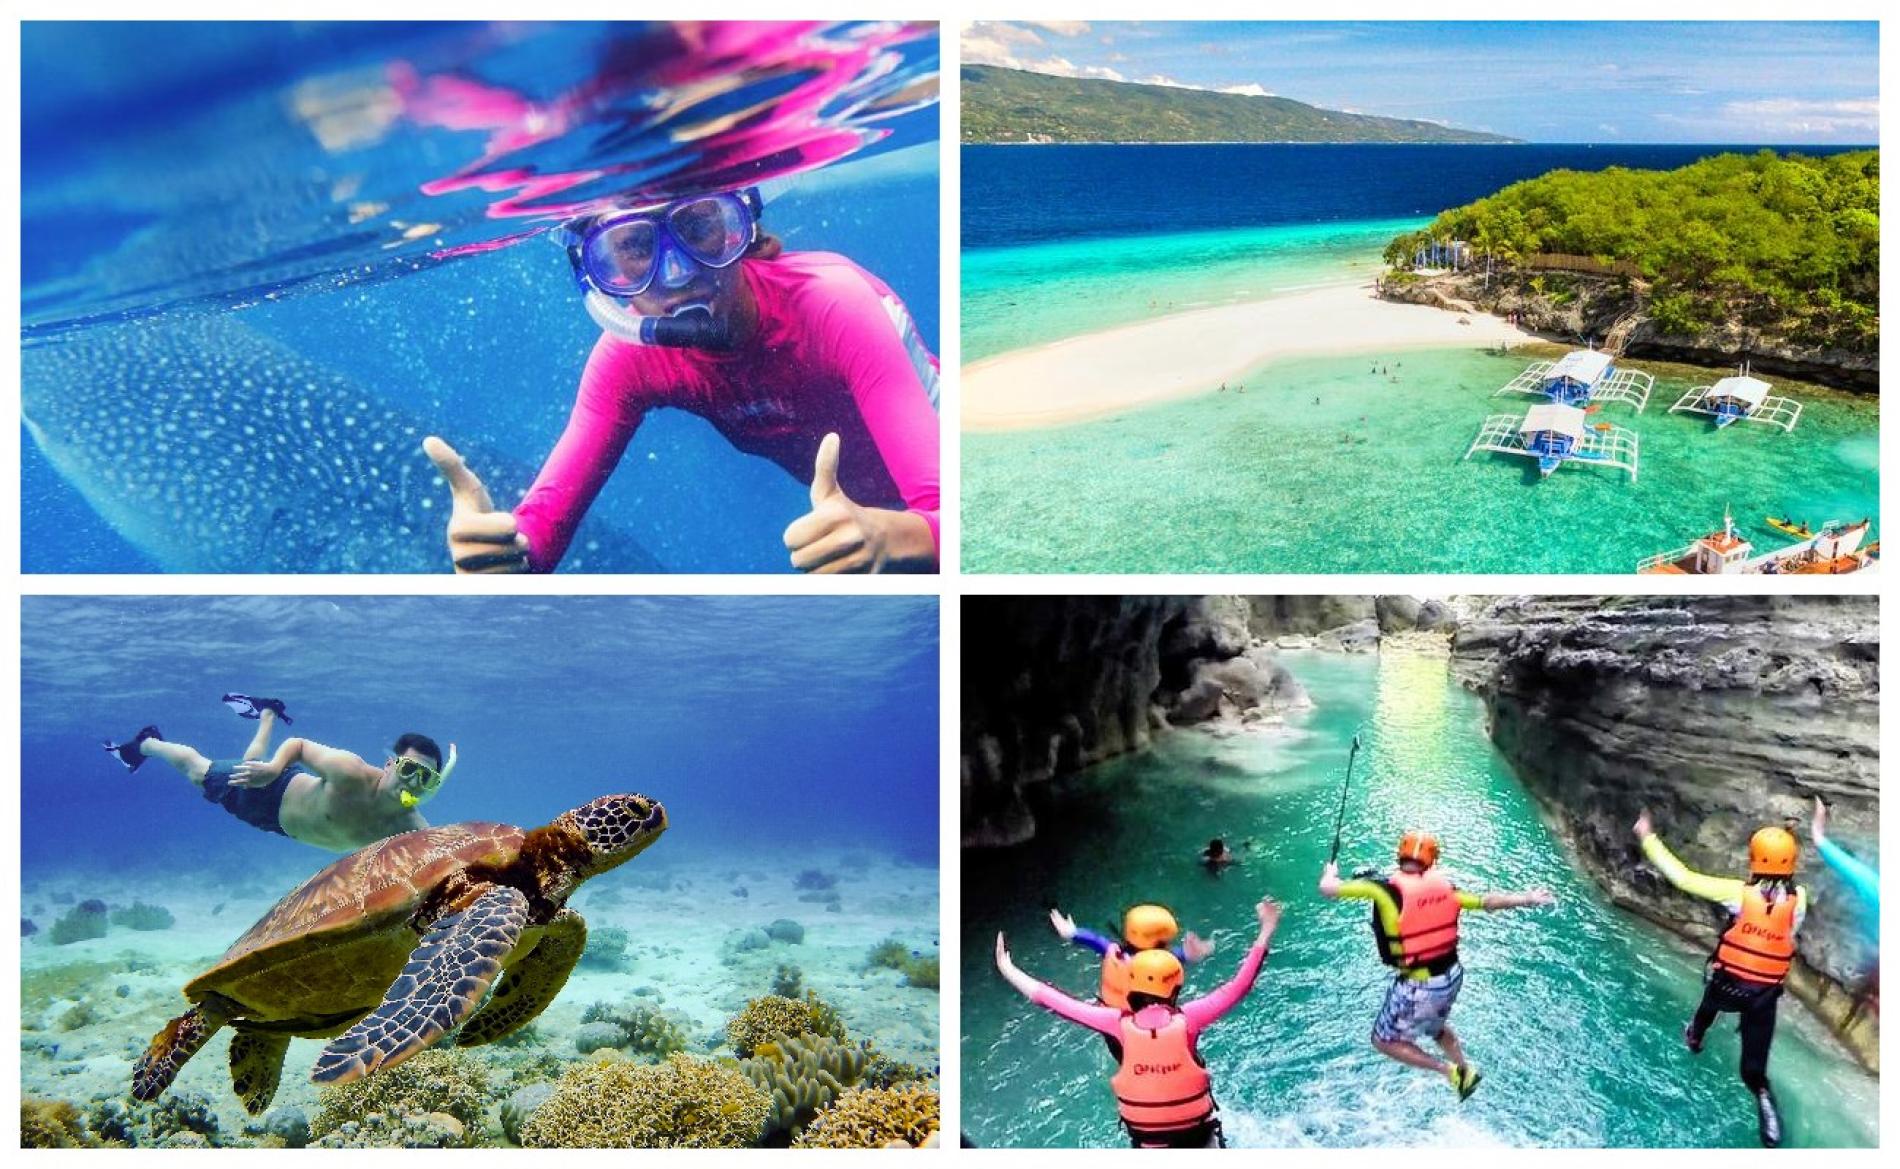 KKday Exclusive] 2-Day Cebu & Oslob Highlights Tour: Shark Swimming, Island Hopping, Canyoneering | Philippines - KKday